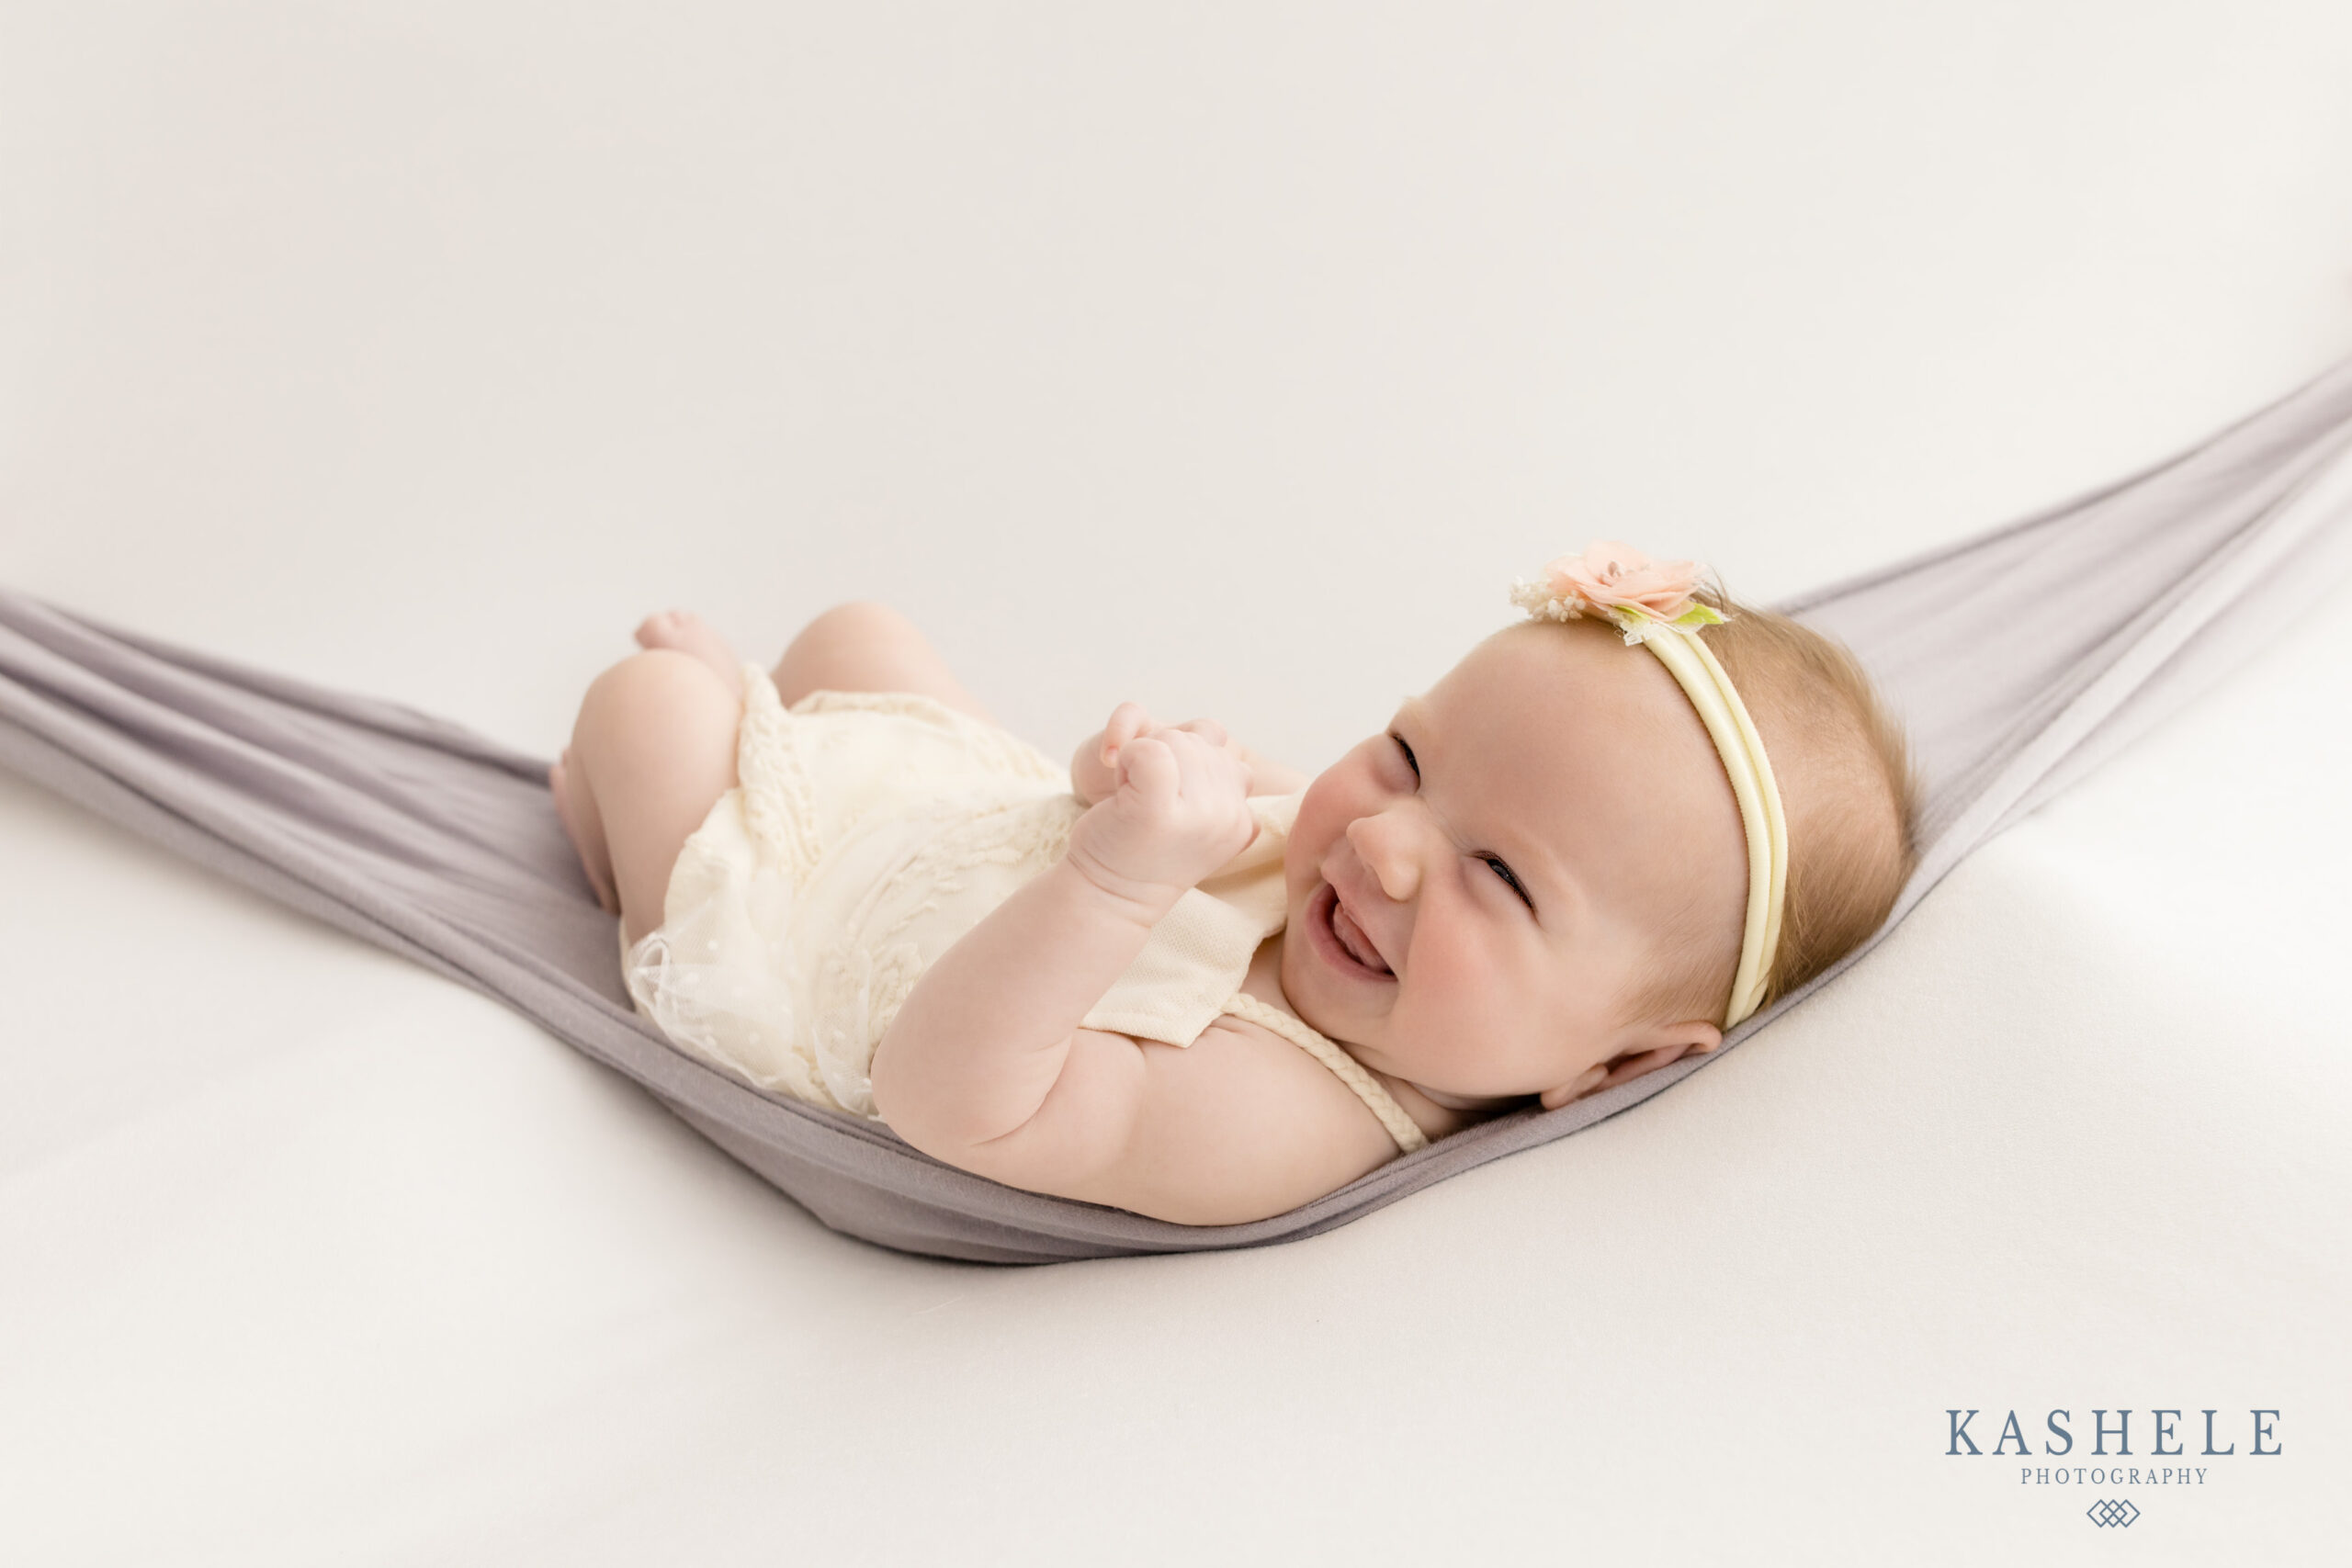 Newborn photoshoot Stock Photos, Royalty Free Newborn photoshoot Images |  Depositphotos